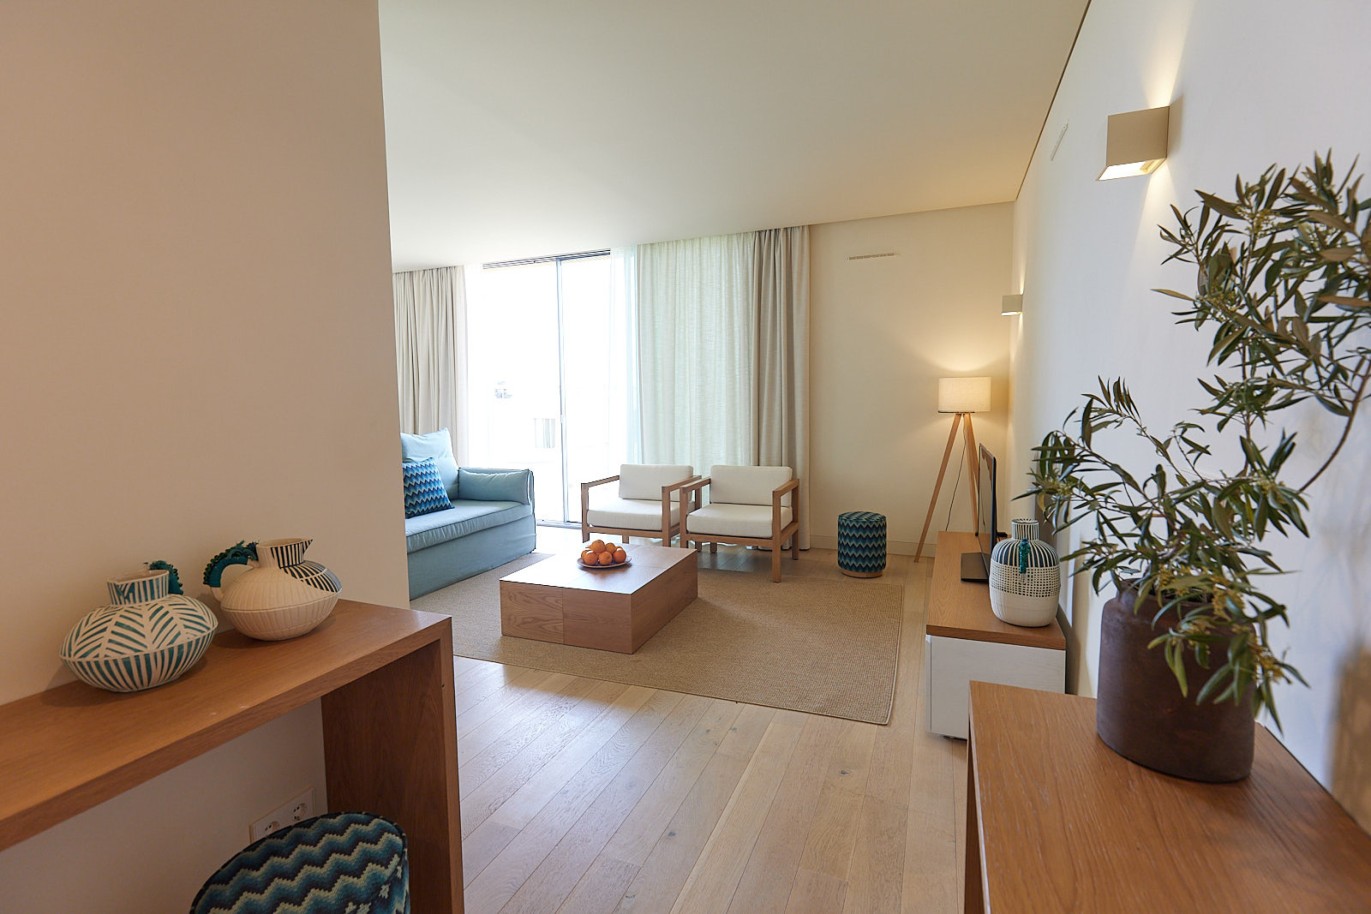 2 bedroom apartment in resort, for sale in Porches, Algarve_229172